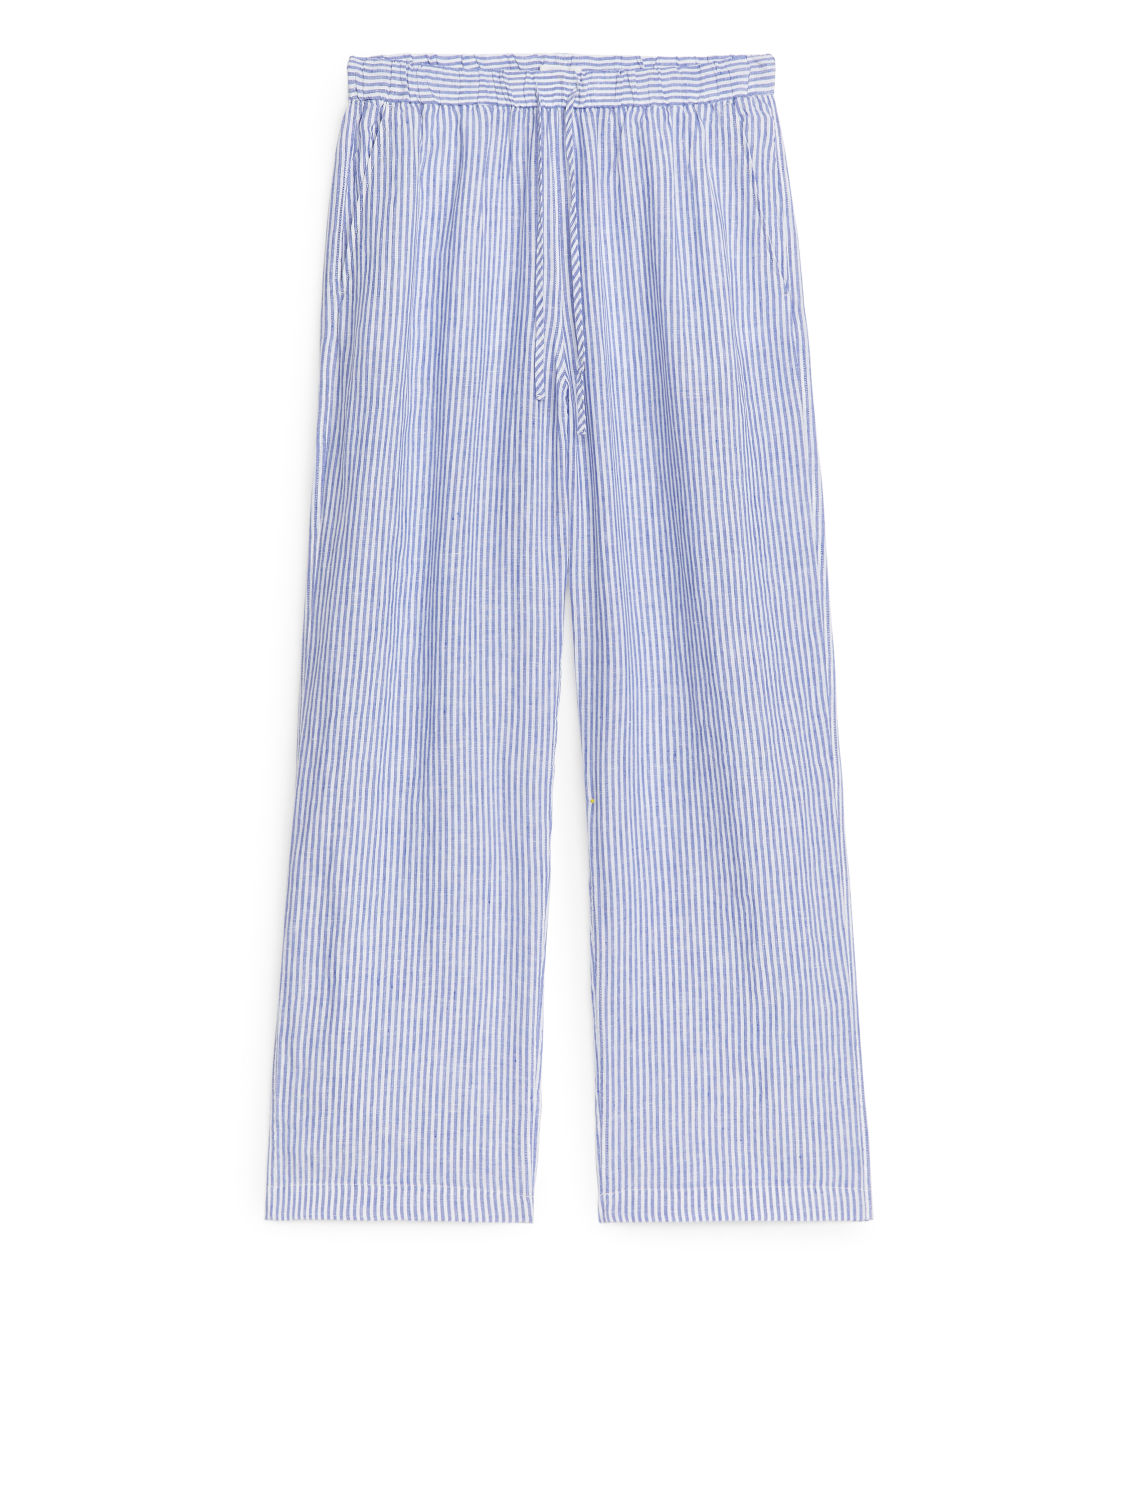 Linen Drawstring Trousers - Blue/white - Arket Gb